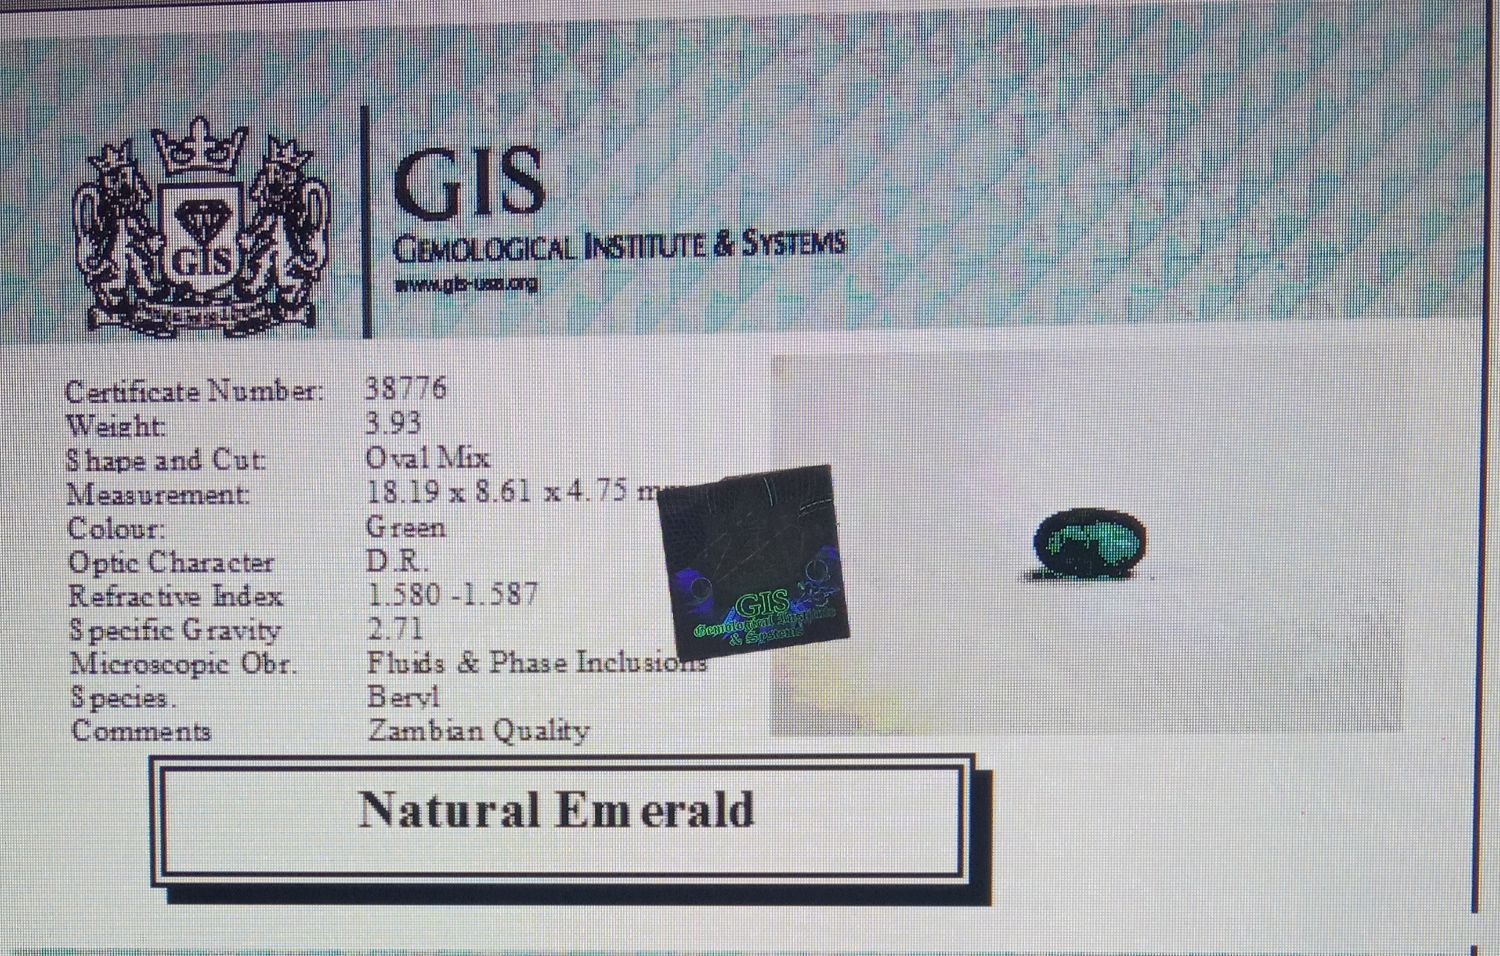 Emerald 3.93 Ct.